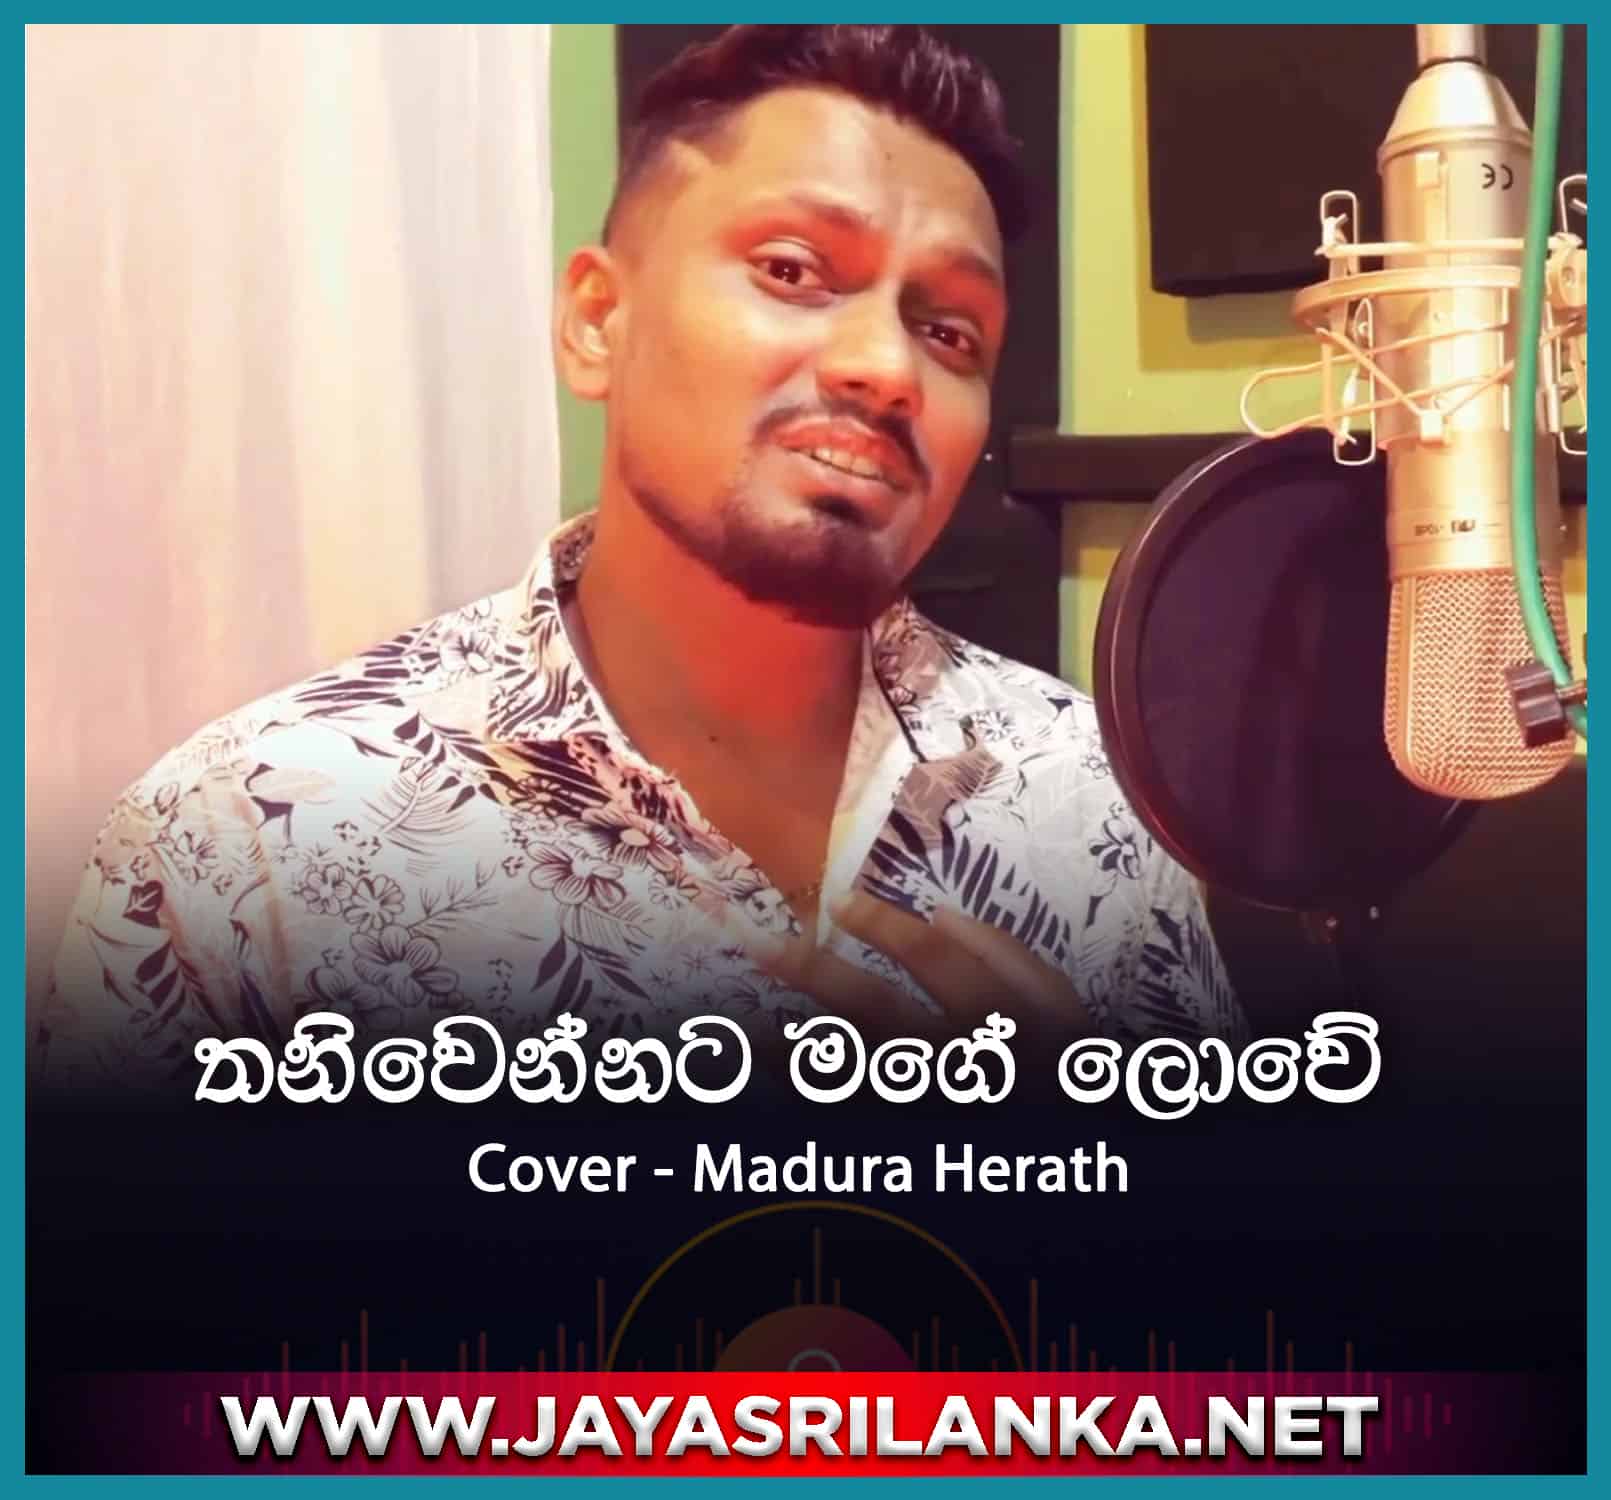 jayasrilanka ~ Thaniwennata Mage Lowe Cover - Madura Herath